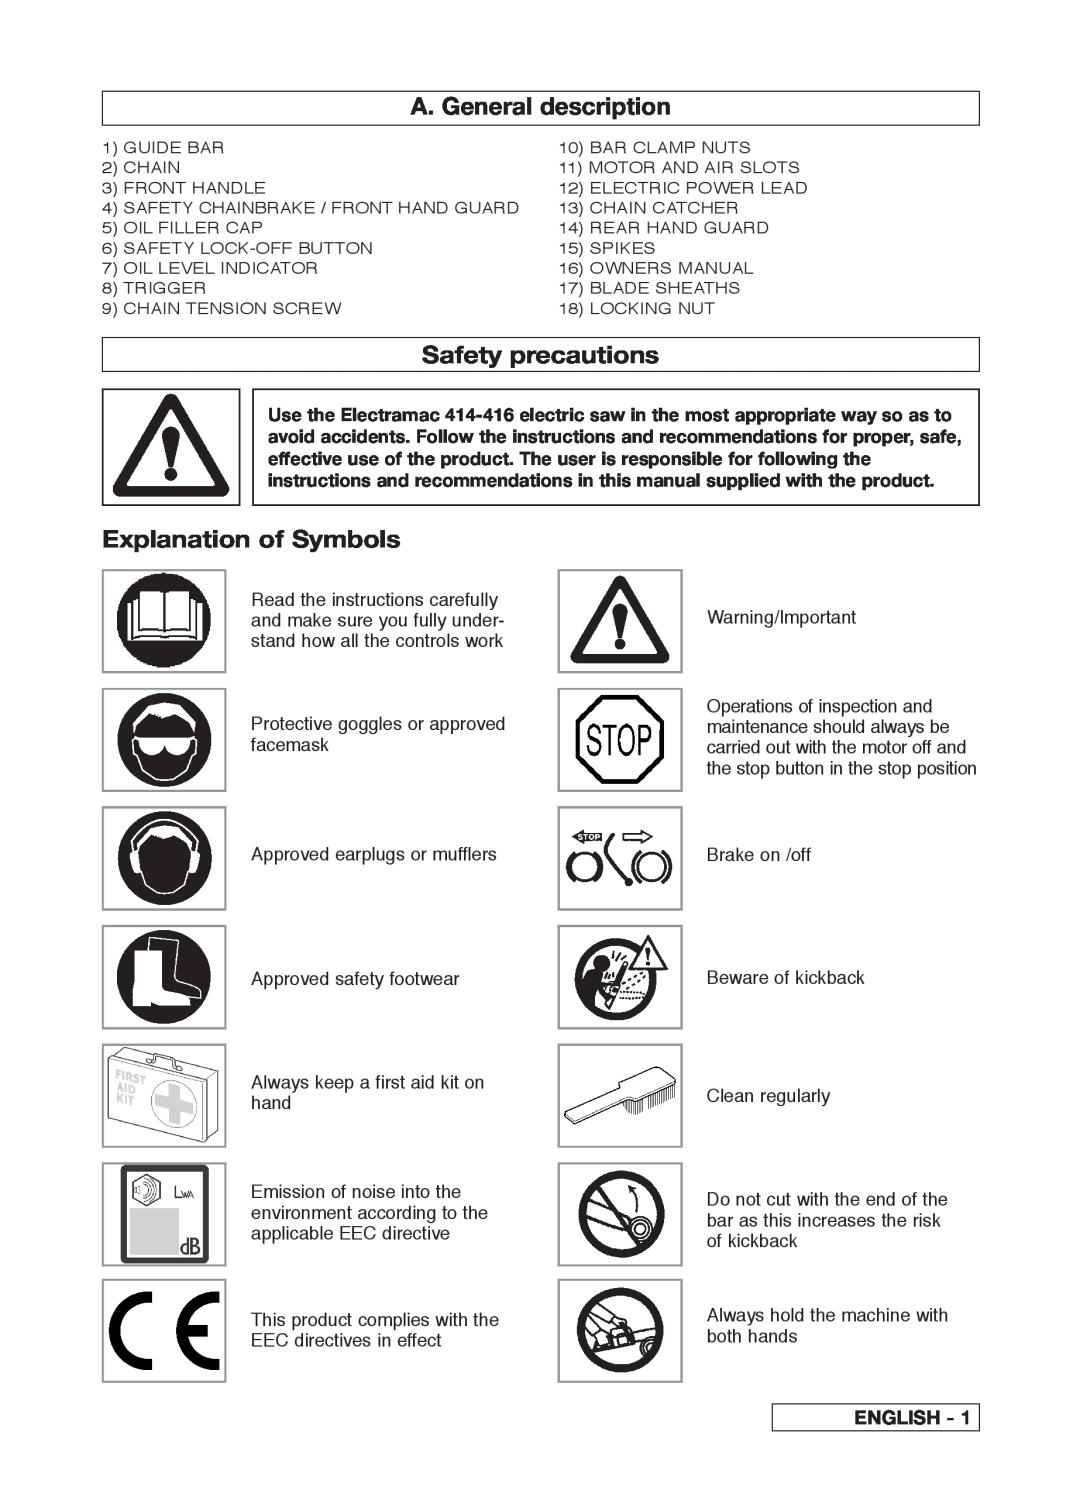 McCulloch 414, 95390054000, 9539004390, 416 manual A. General description, Safety precautions, Explanation of Symbols, English 